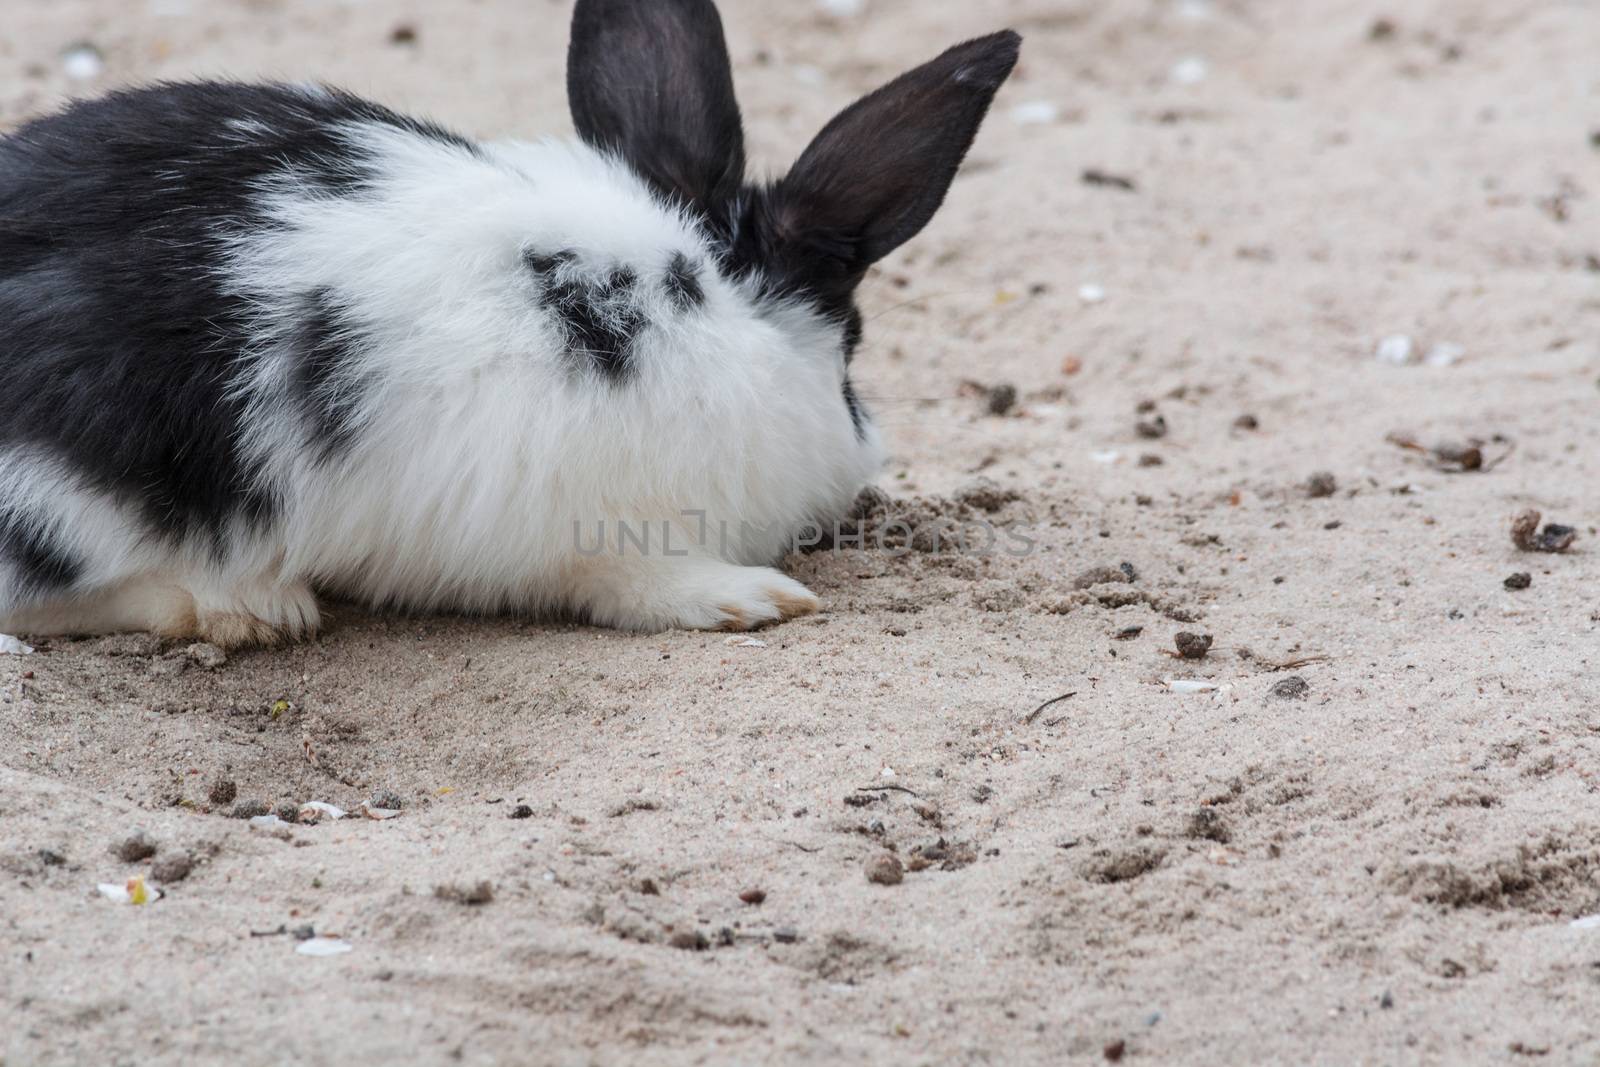 White Black rabbit - bunny sitting on sandy soil.